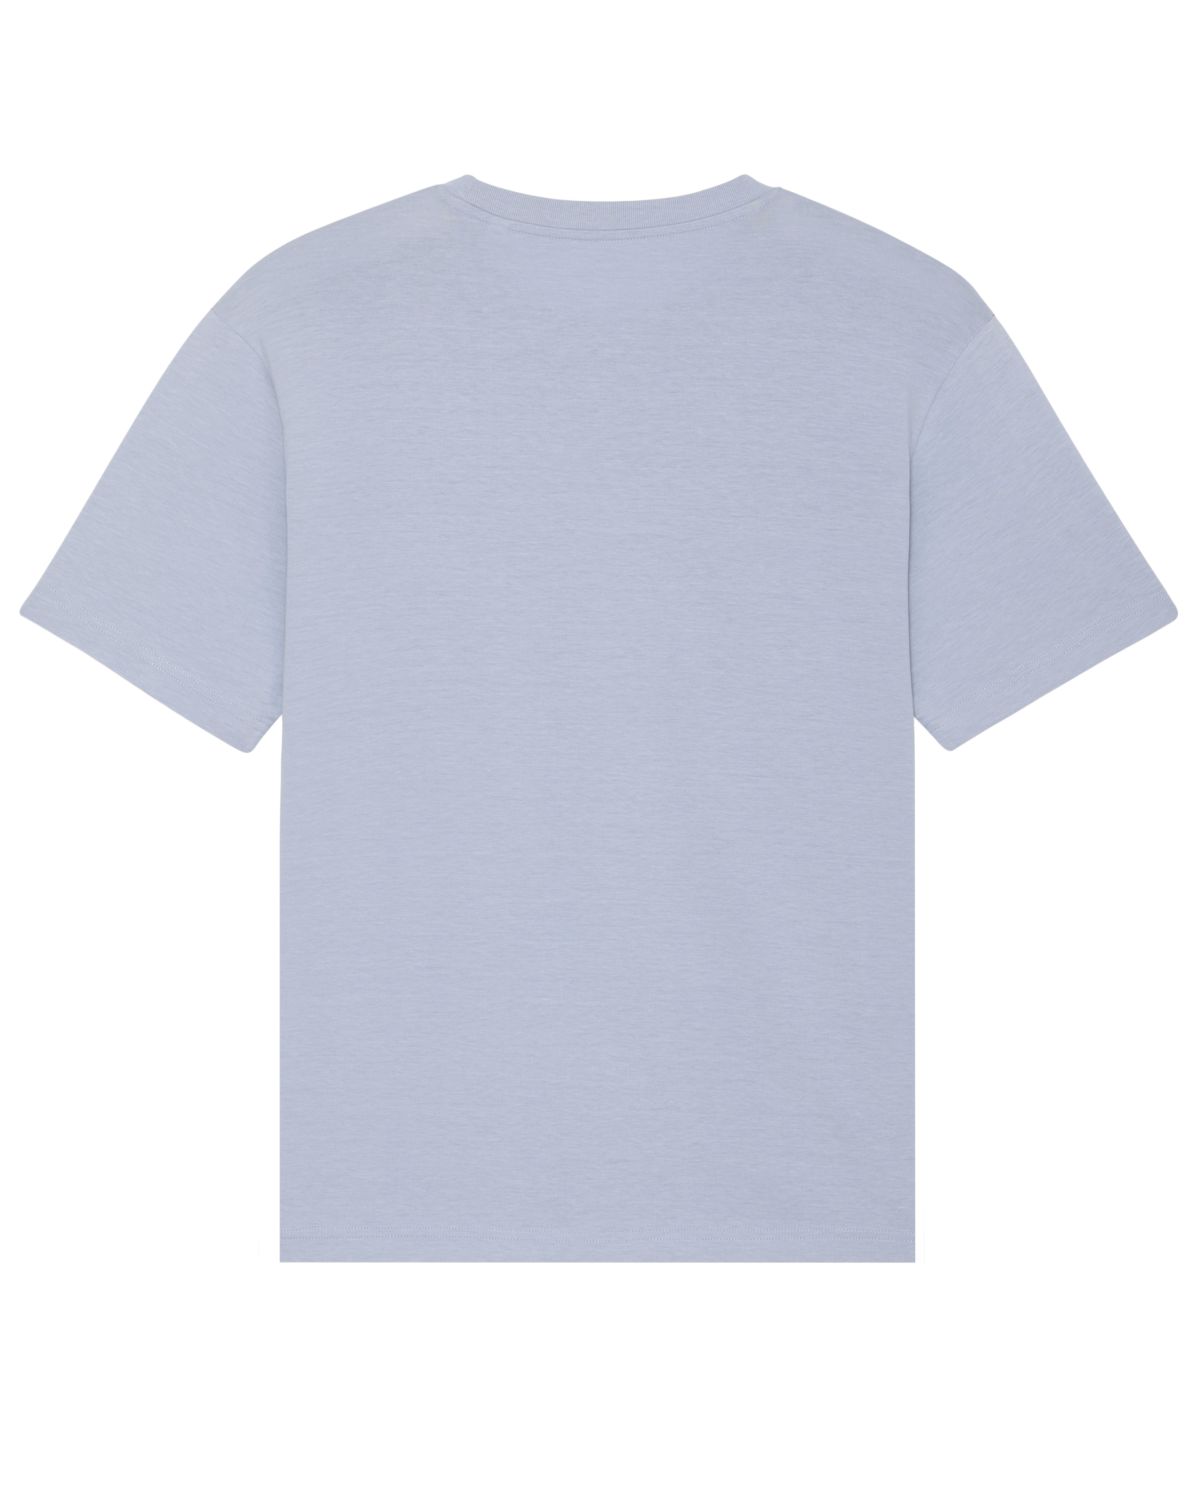 Eagles Unisex T-Shirt - Light Blue